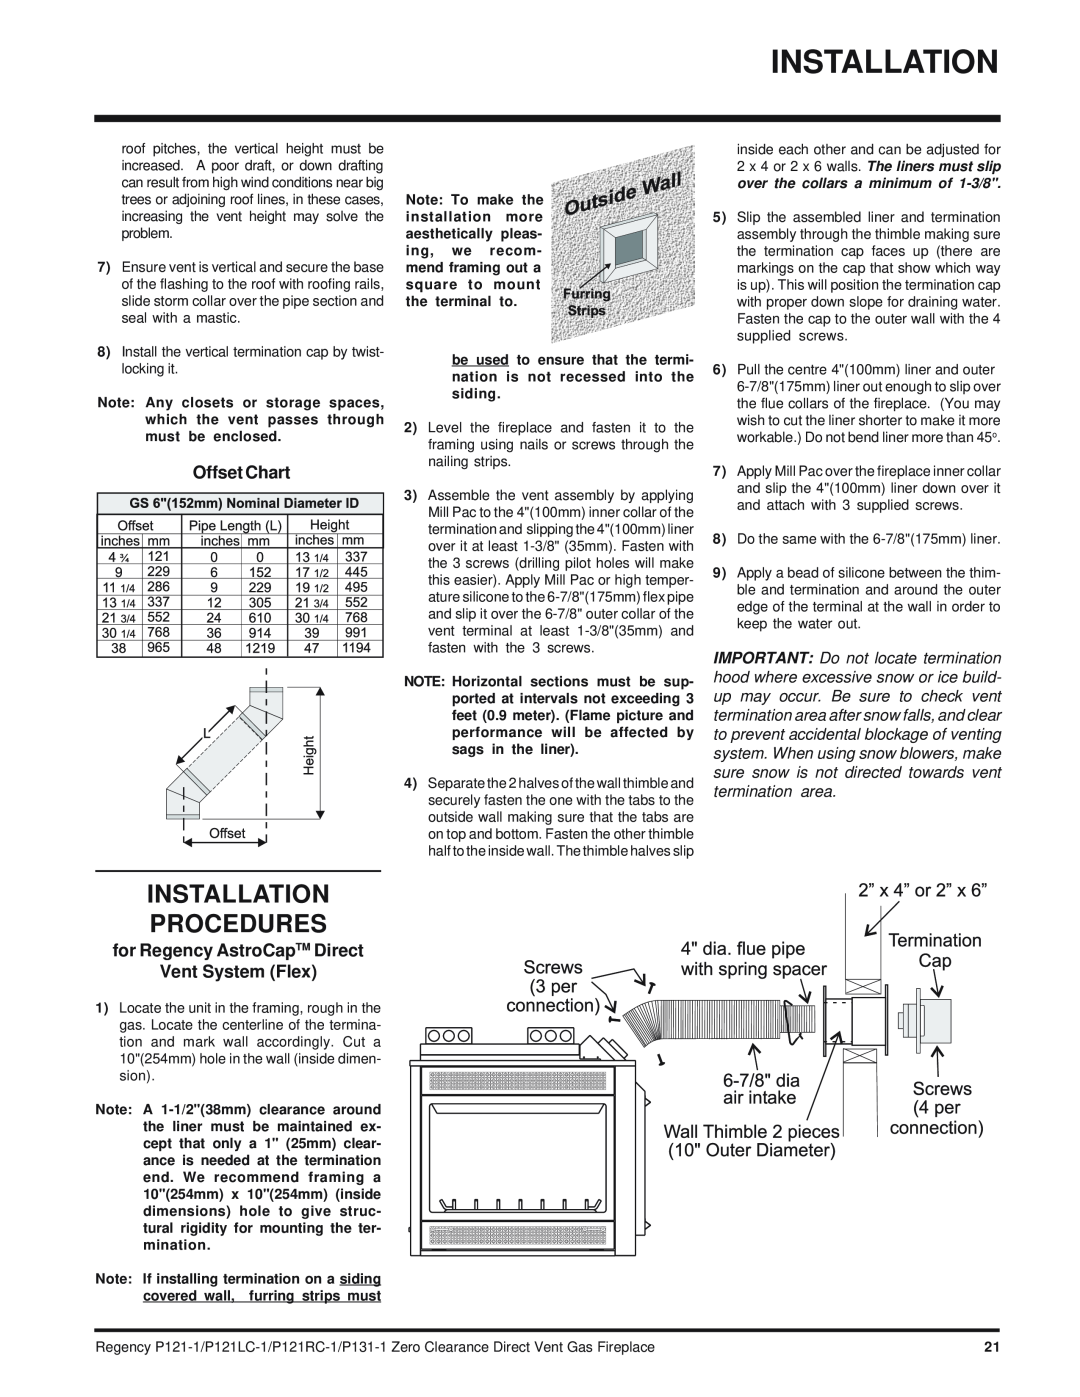 Regency P121RC, P121LC, P131 Installation Procedures, Offset Chart, for Regency AstroCapTM Direct Vent System Flex 